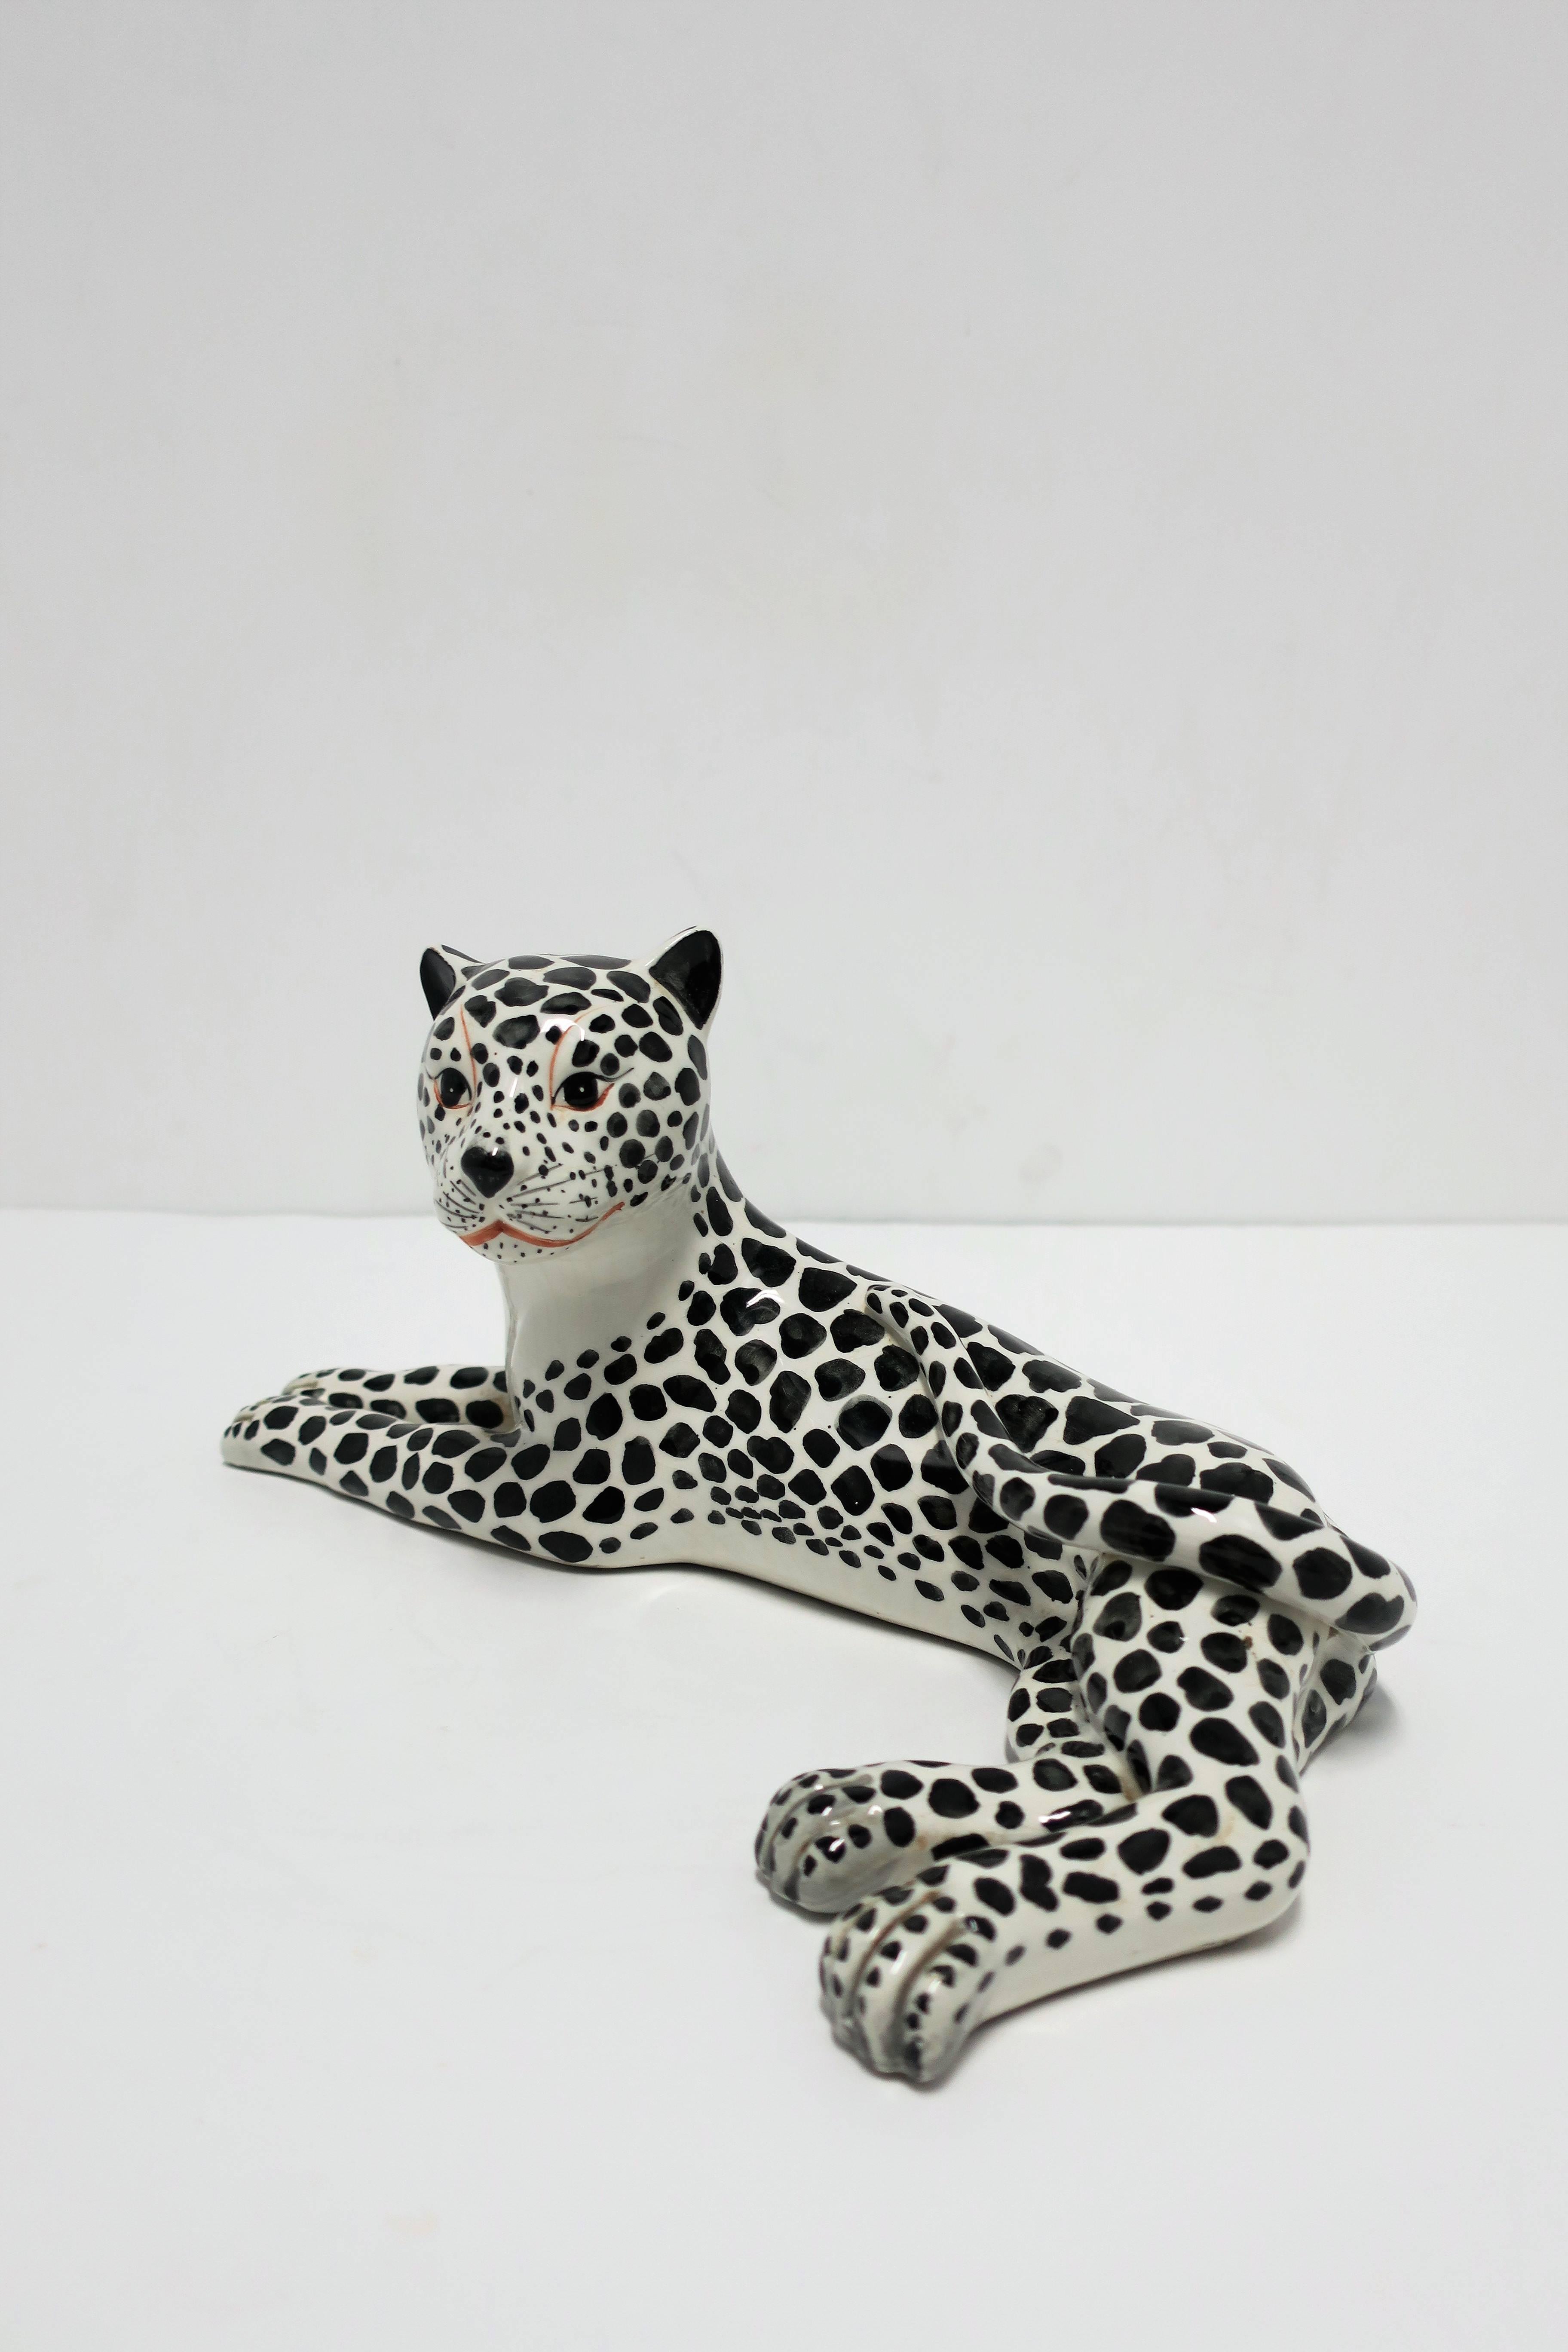 Art Deco Italian Black and White Cheetah or Leopard Cat Sculpture